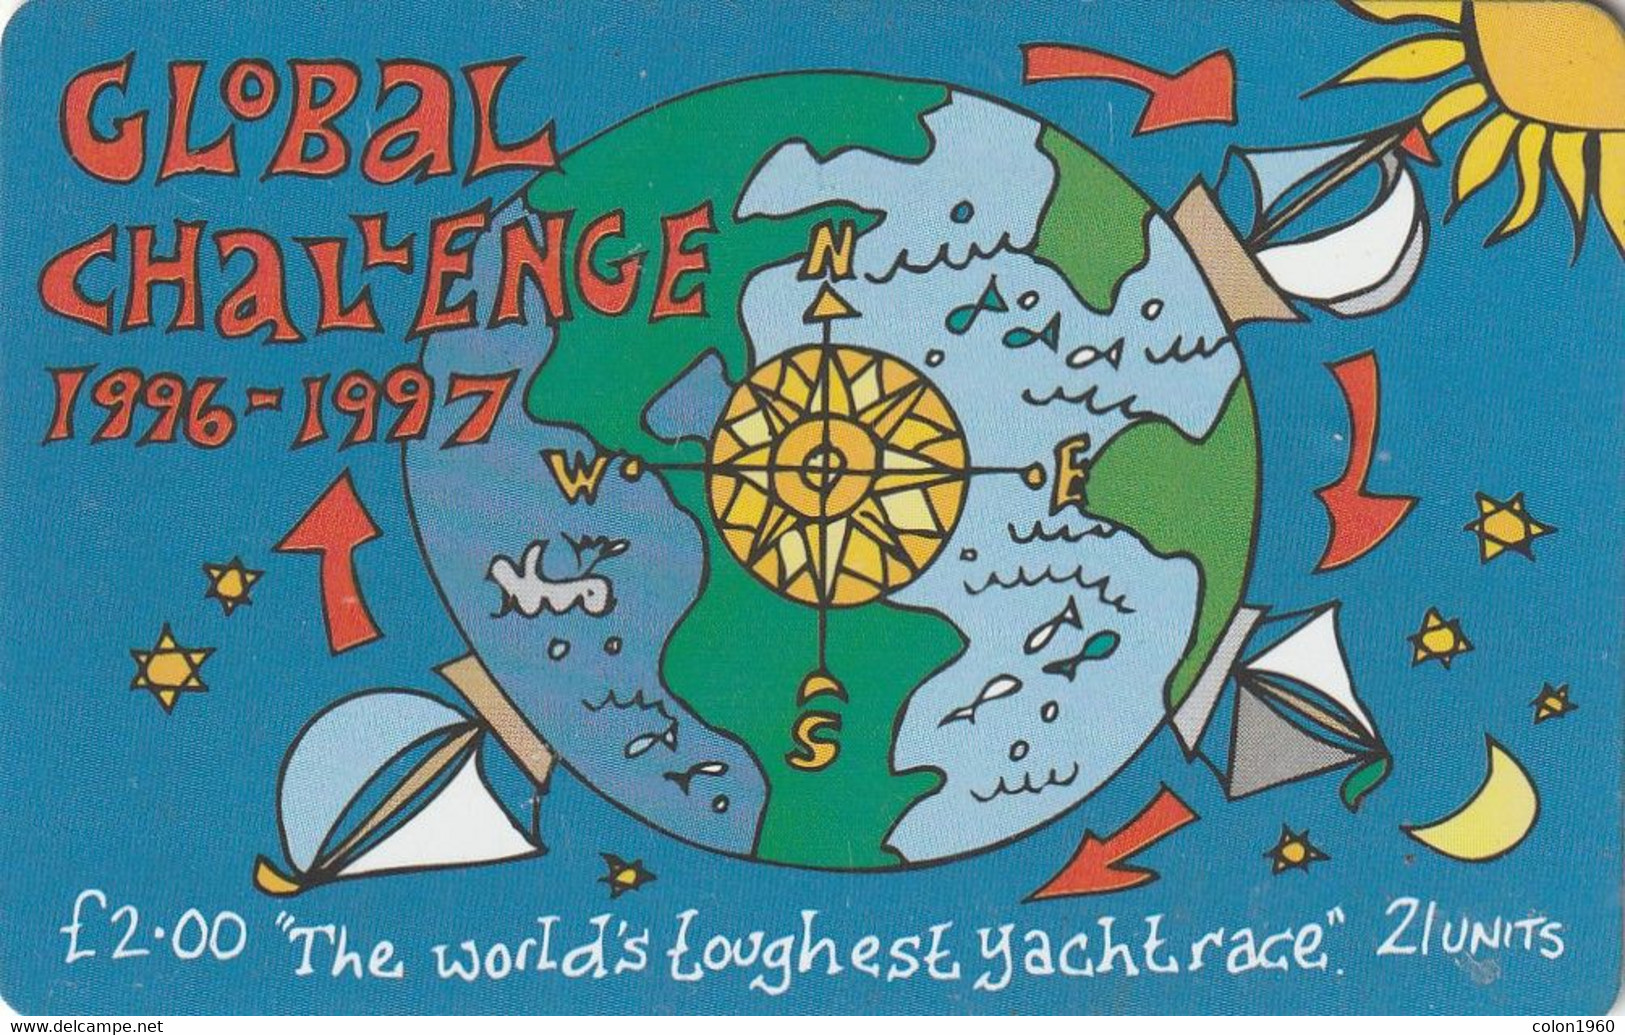 ISLE OF MAN. Global Challenge Yacht Race. 1996-01. 5000 Ex. IM-TEL-0111. (024). - Isola Di Man